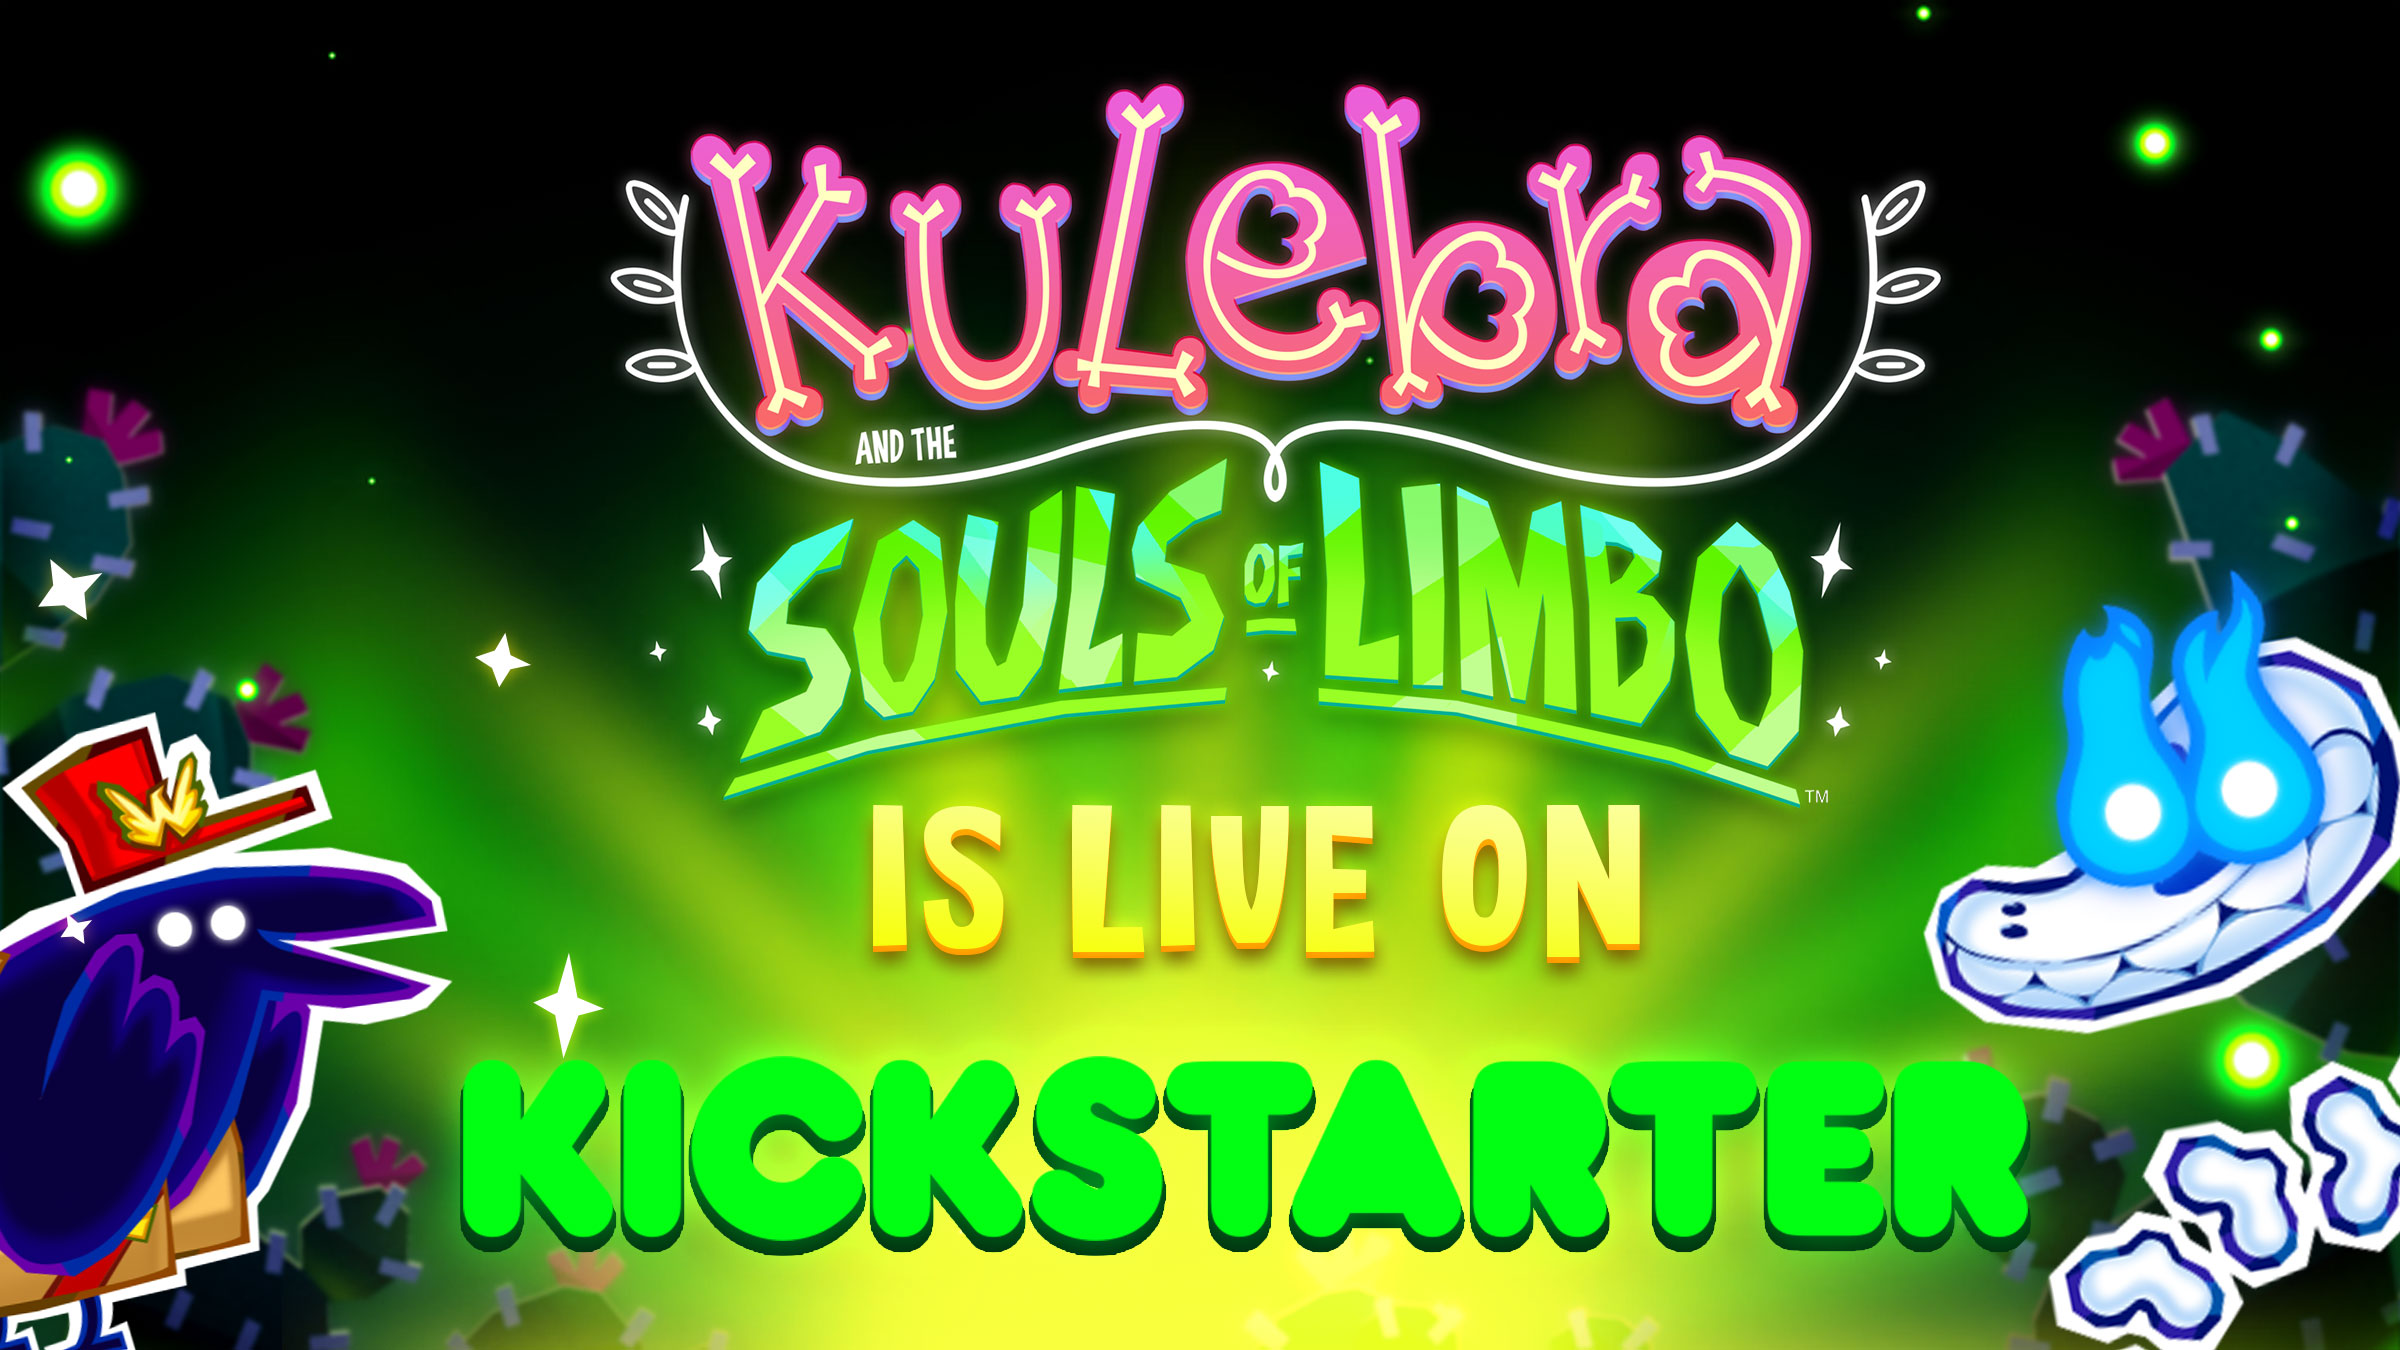 Kulebra and the Souls of Limbo is live on Kickstarter